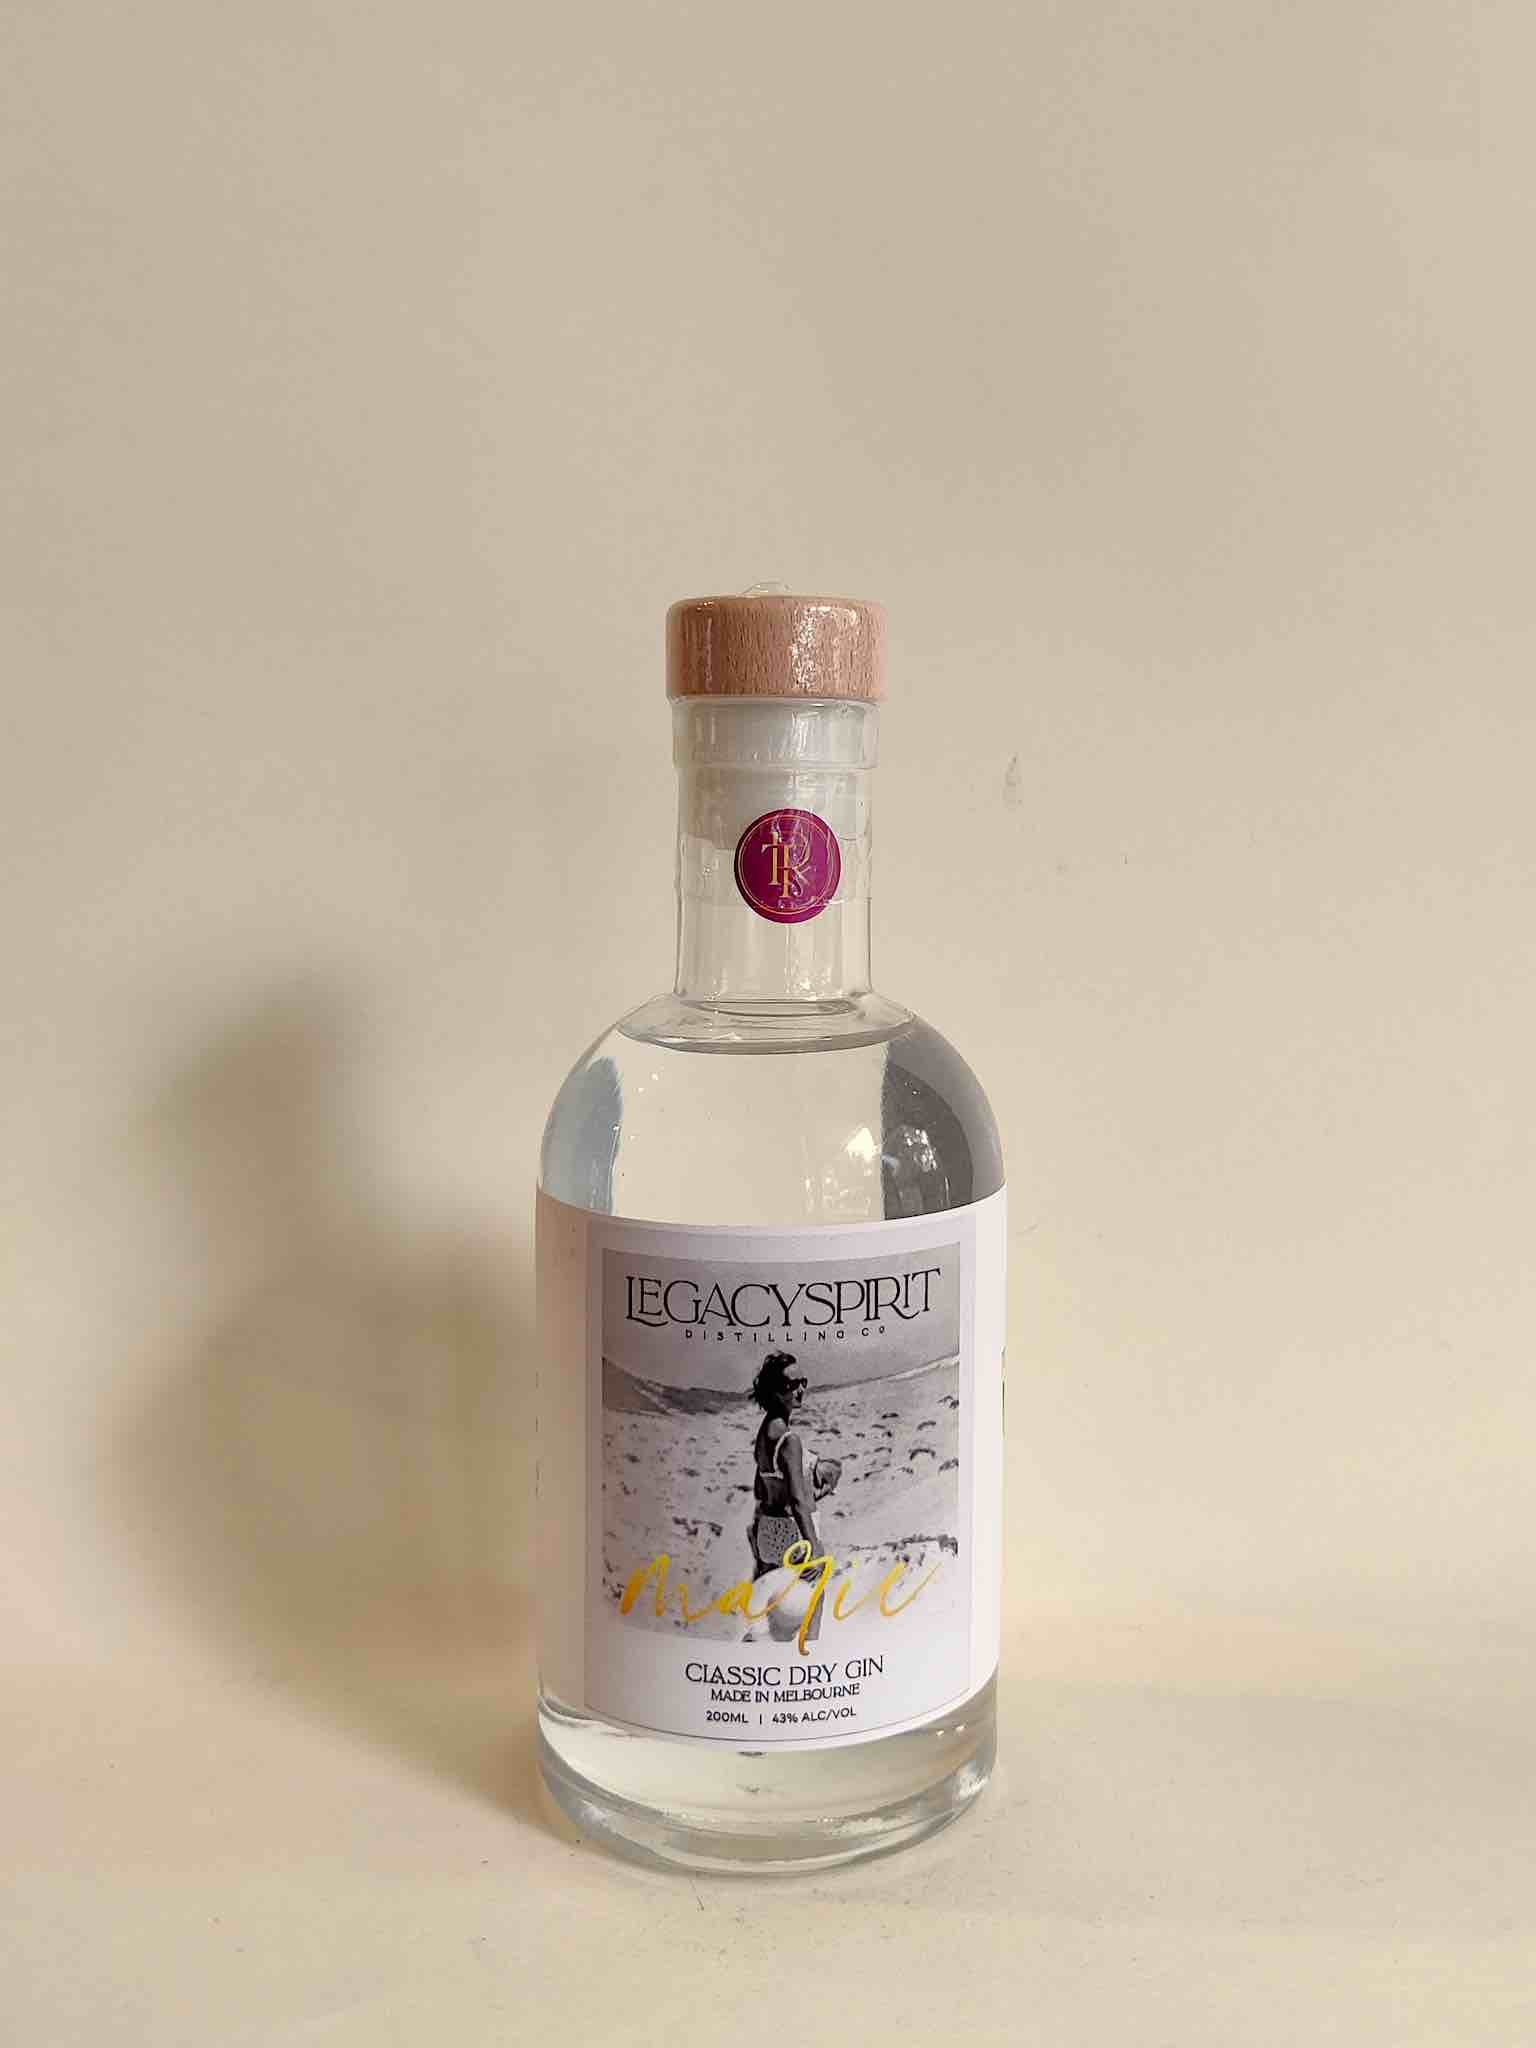 A 200ml bottle of Legacy Spirit Marie Gin.